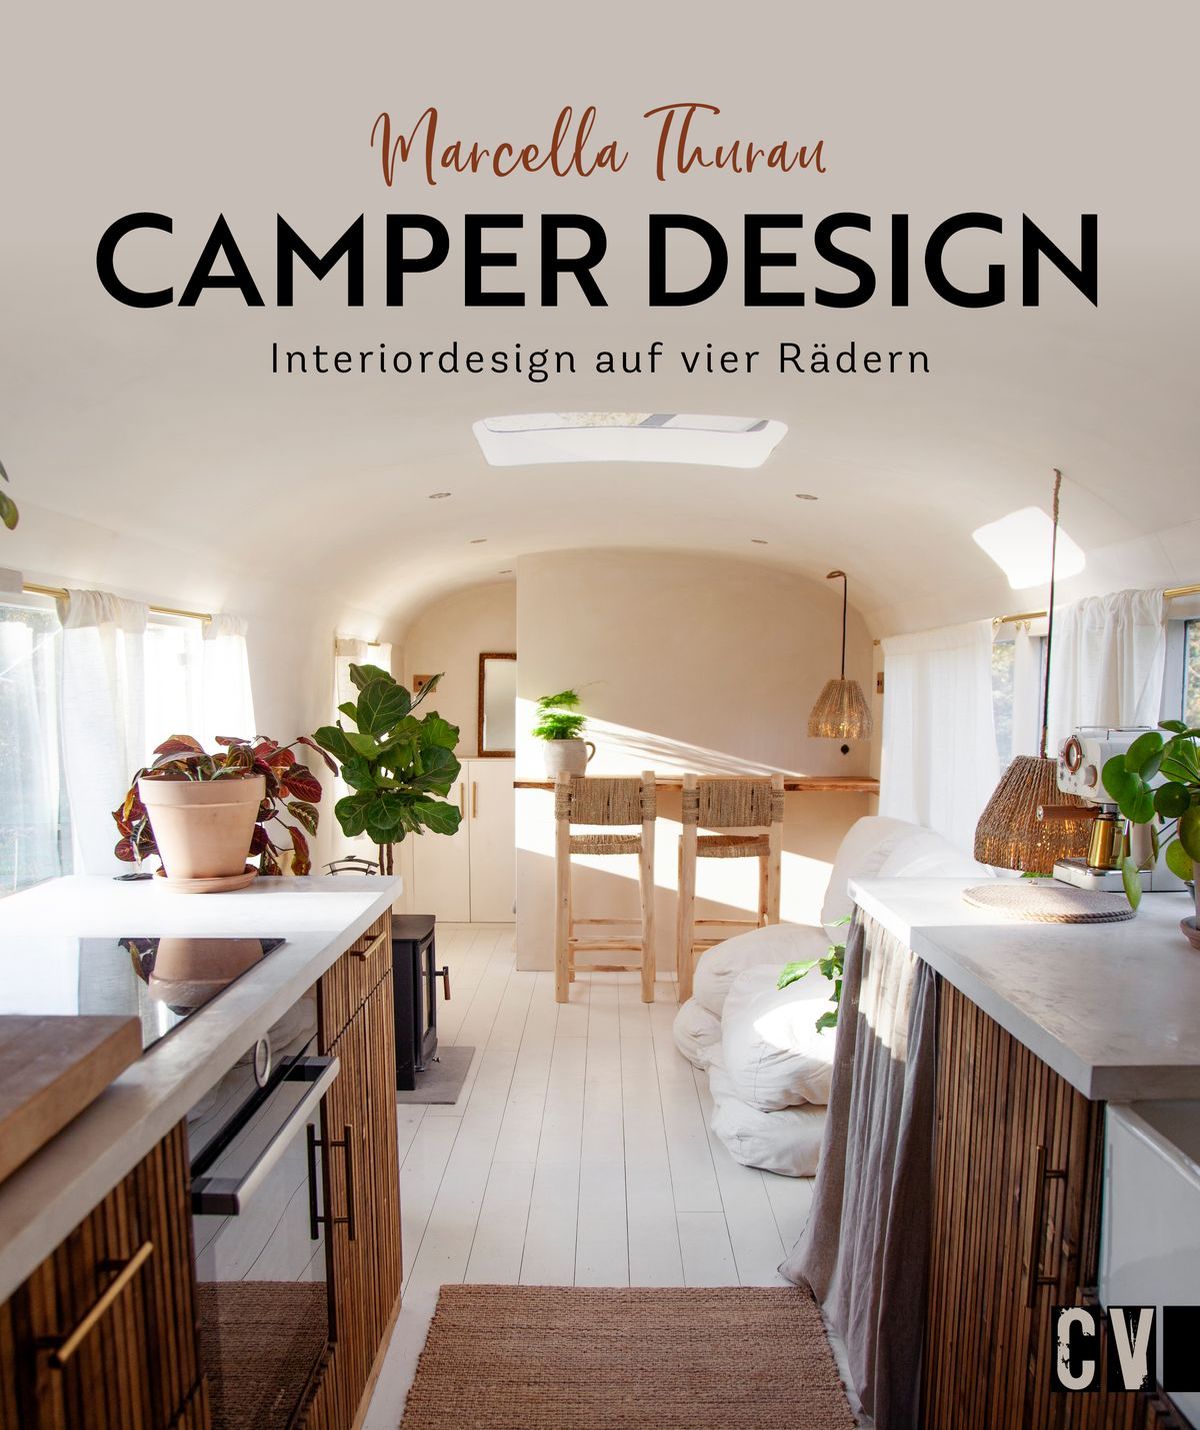 Marcella Thurau | Camper Design | 192 Seiten | 29,99 Euro | ISBN 978-3-8388-3843-4